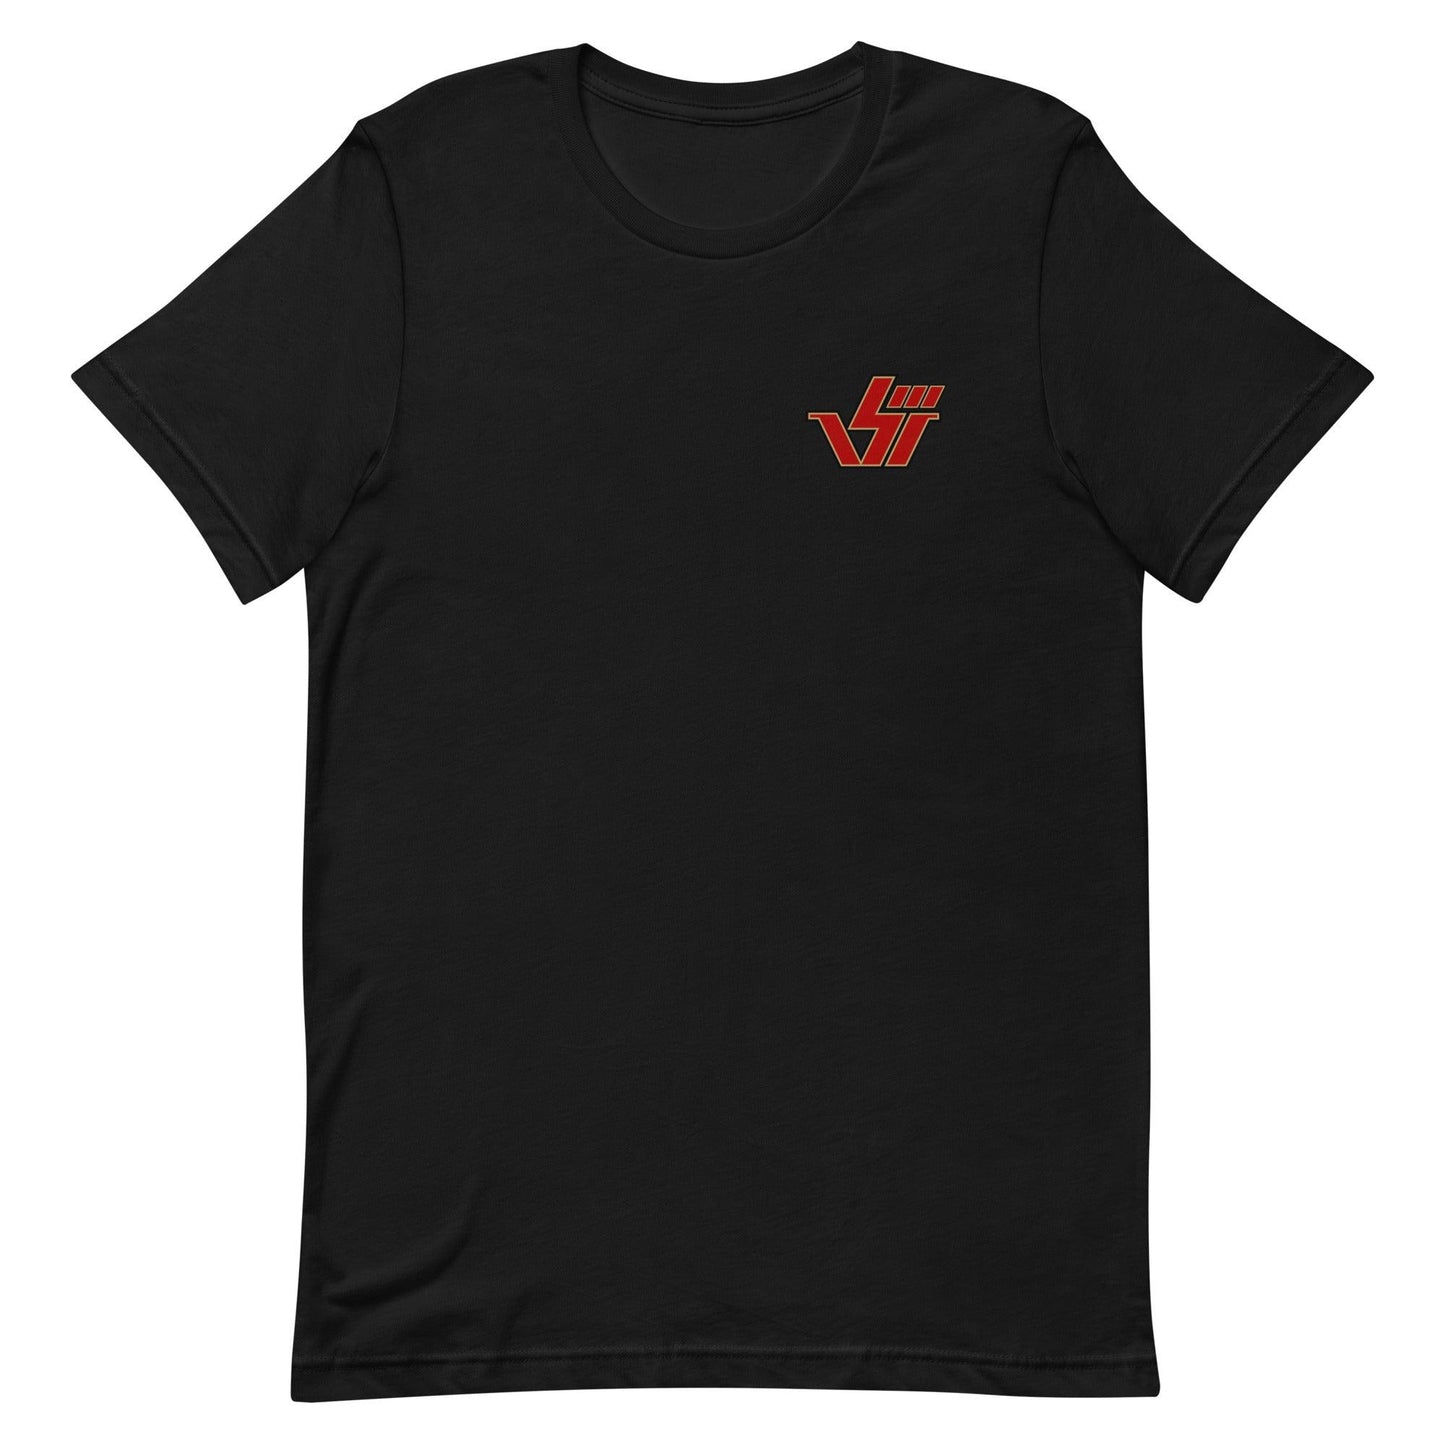 Samuel Womack "Essential" t-shirt - Fan Arch